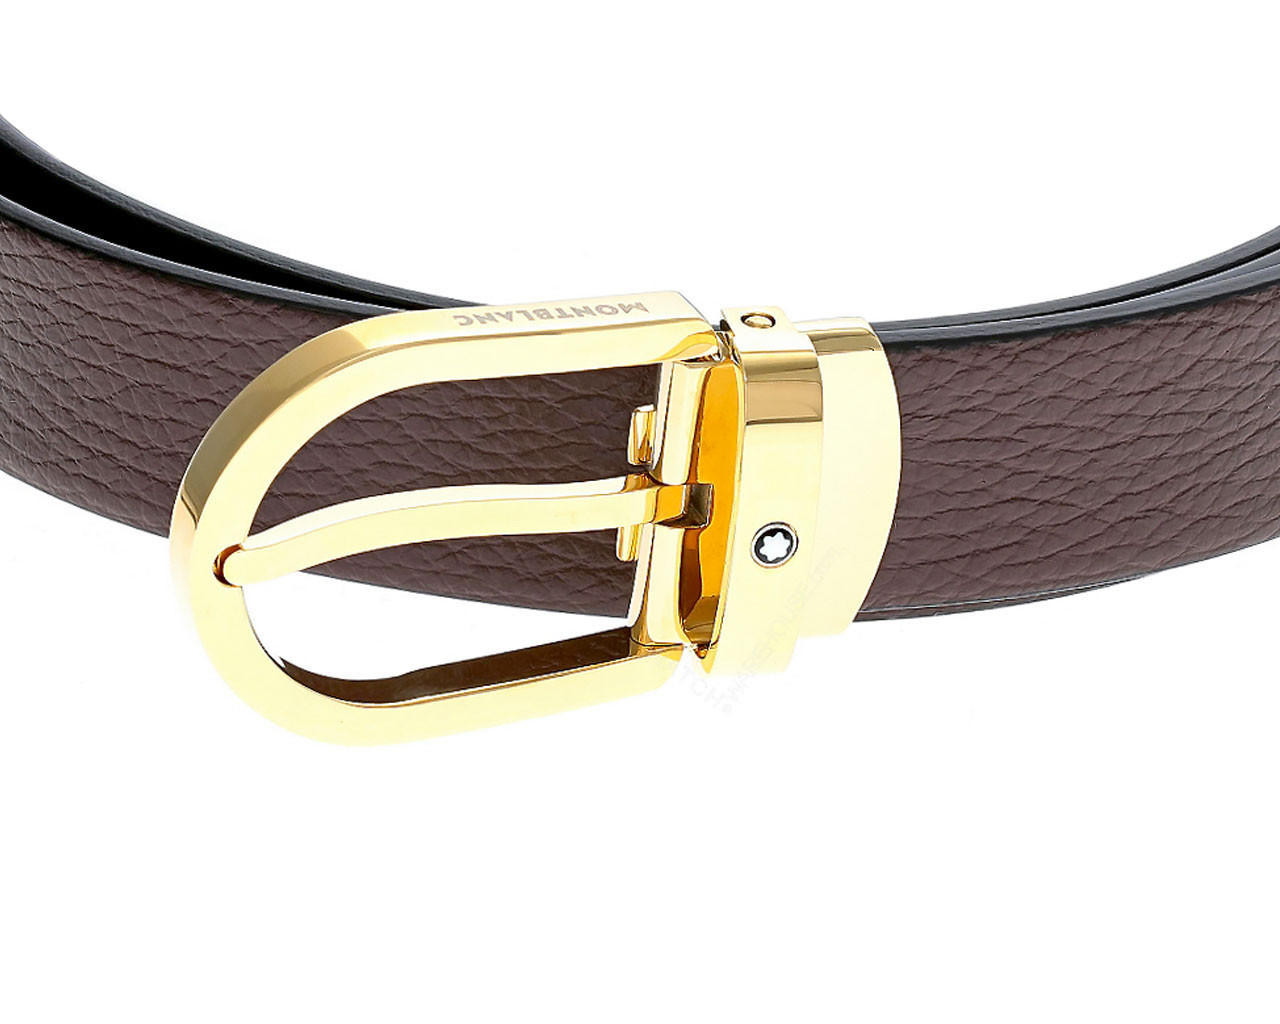 taiga leather belt